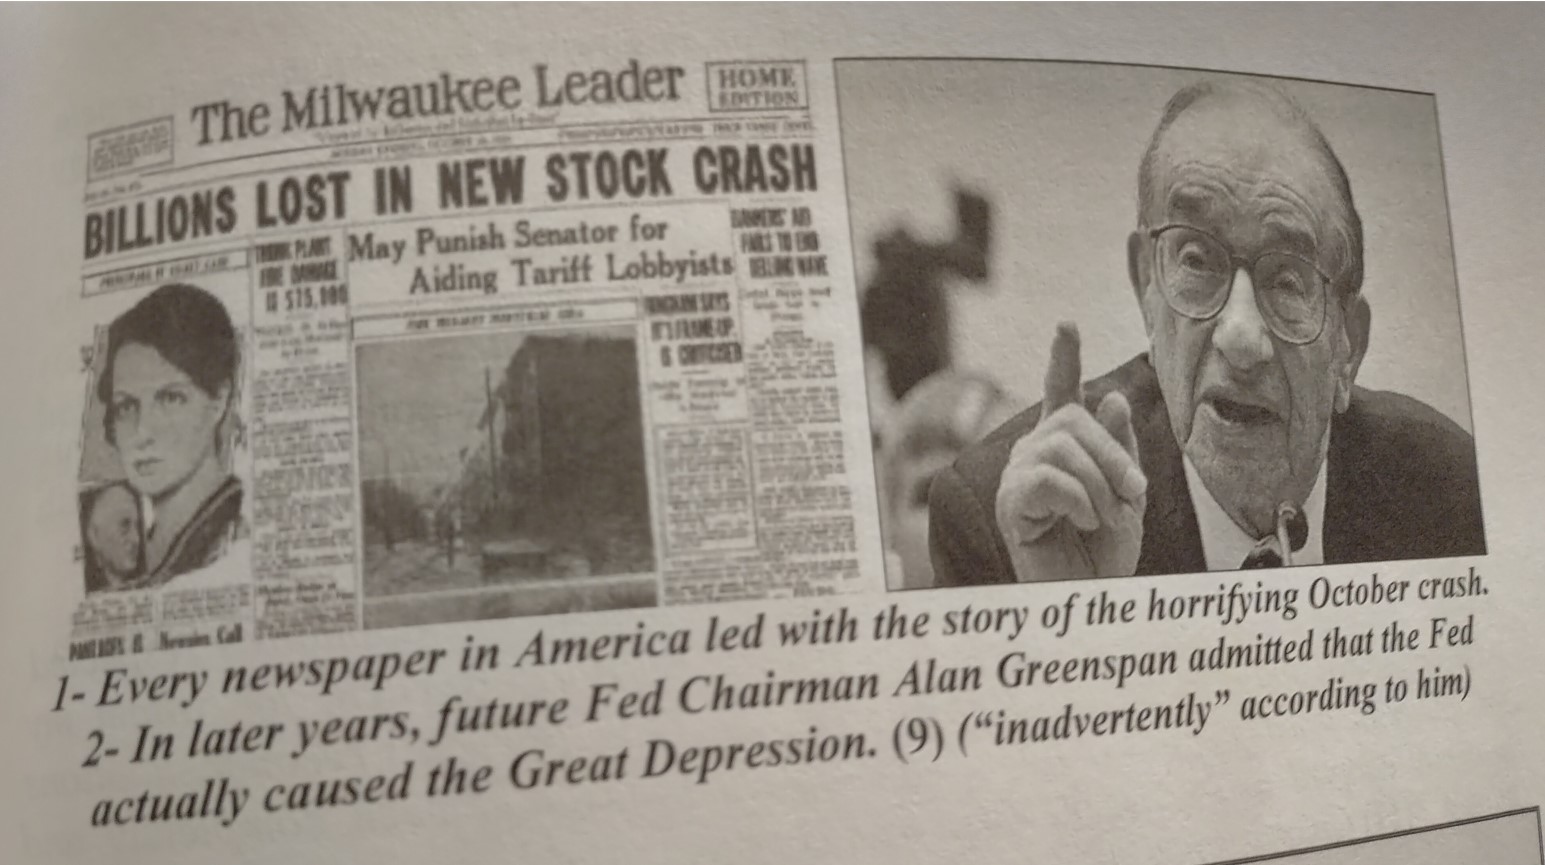 1929 Stock Market Crash